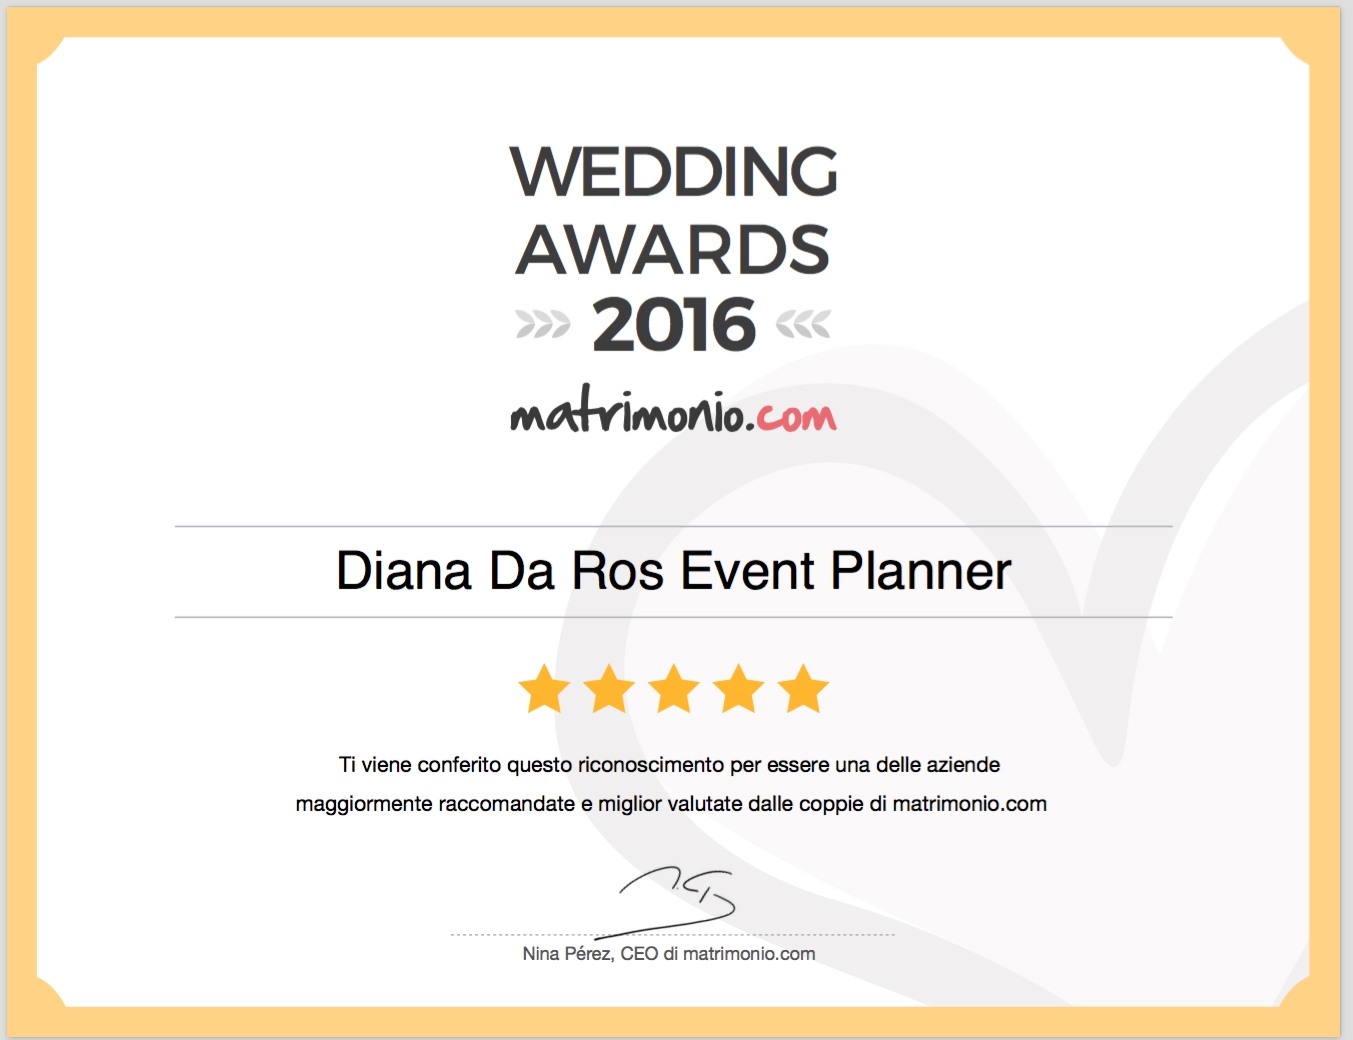 wedding-awards by Diana Da Ros